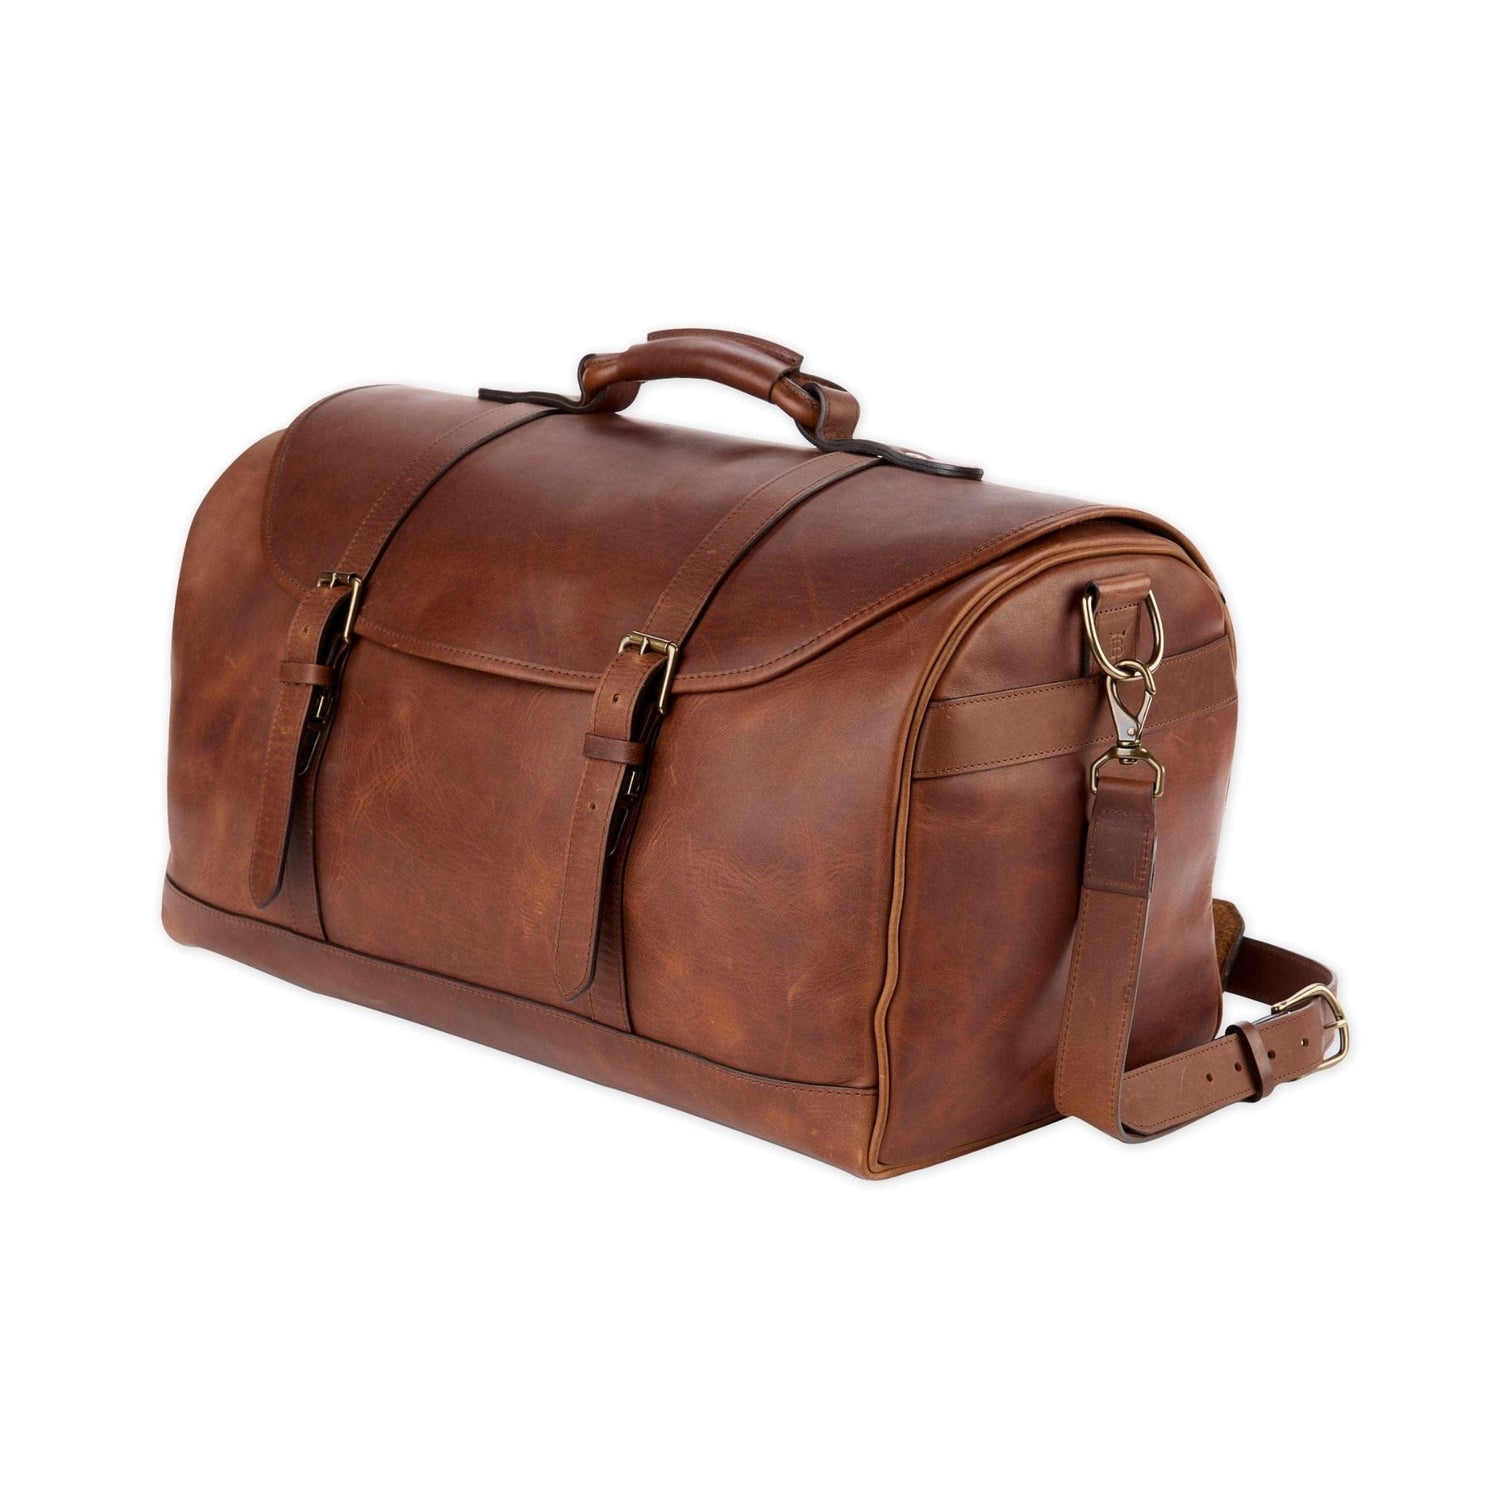 Cognac Brown Matte Leather Duffel Bag - Tender Is the Night 